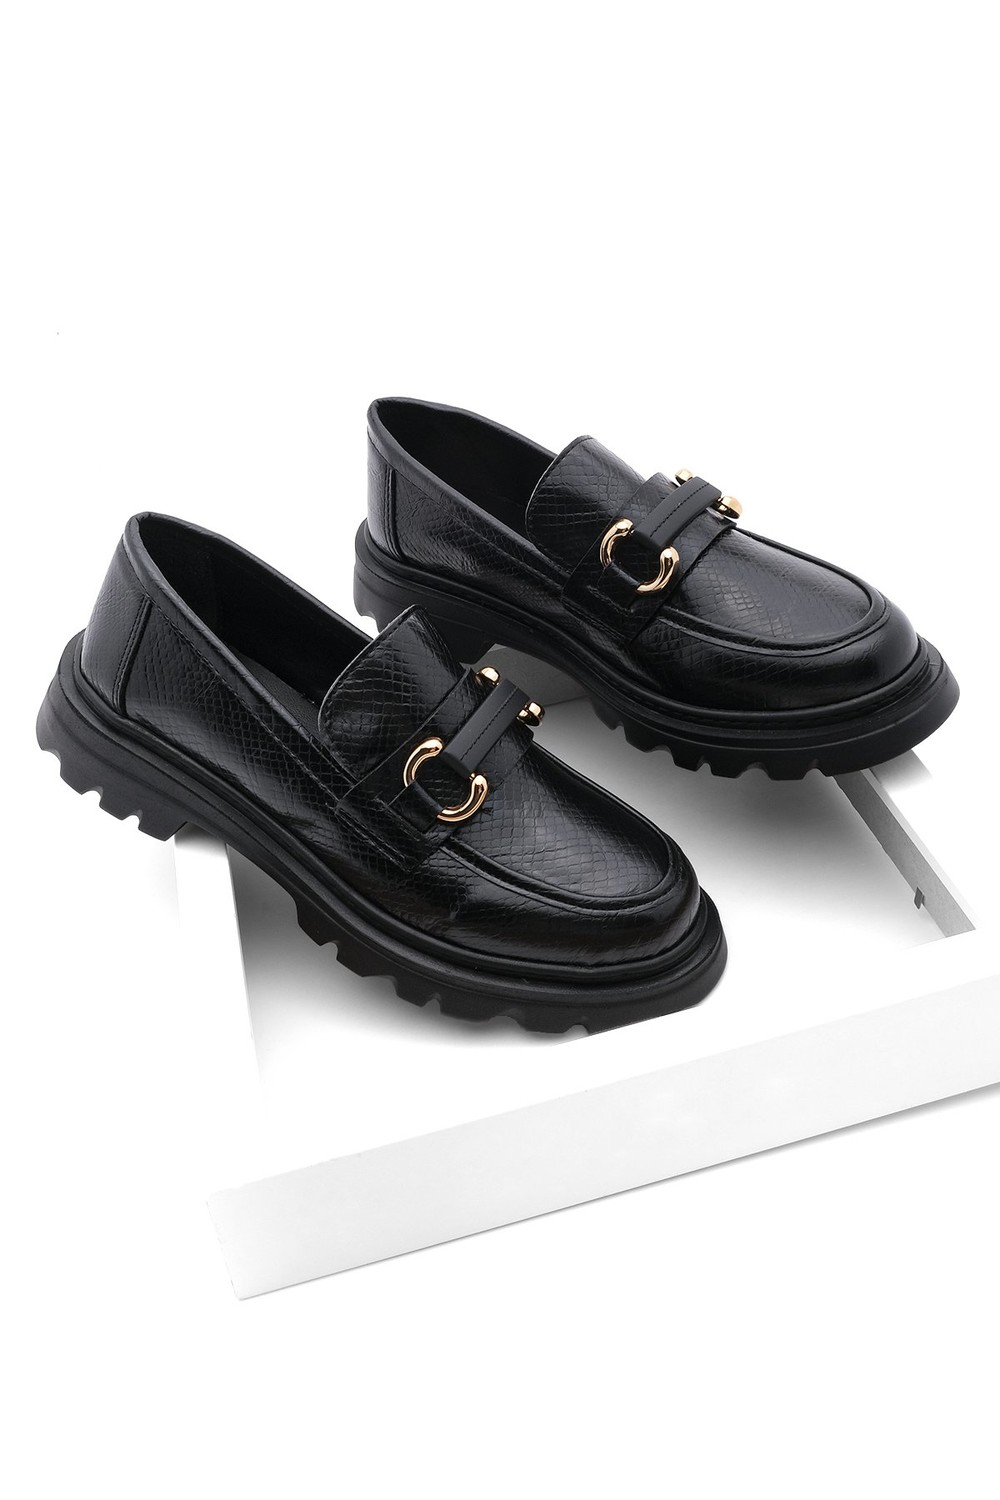 Marjin Women's Loafer High Sole Buckle Casual Shoes Kinles Black Snake